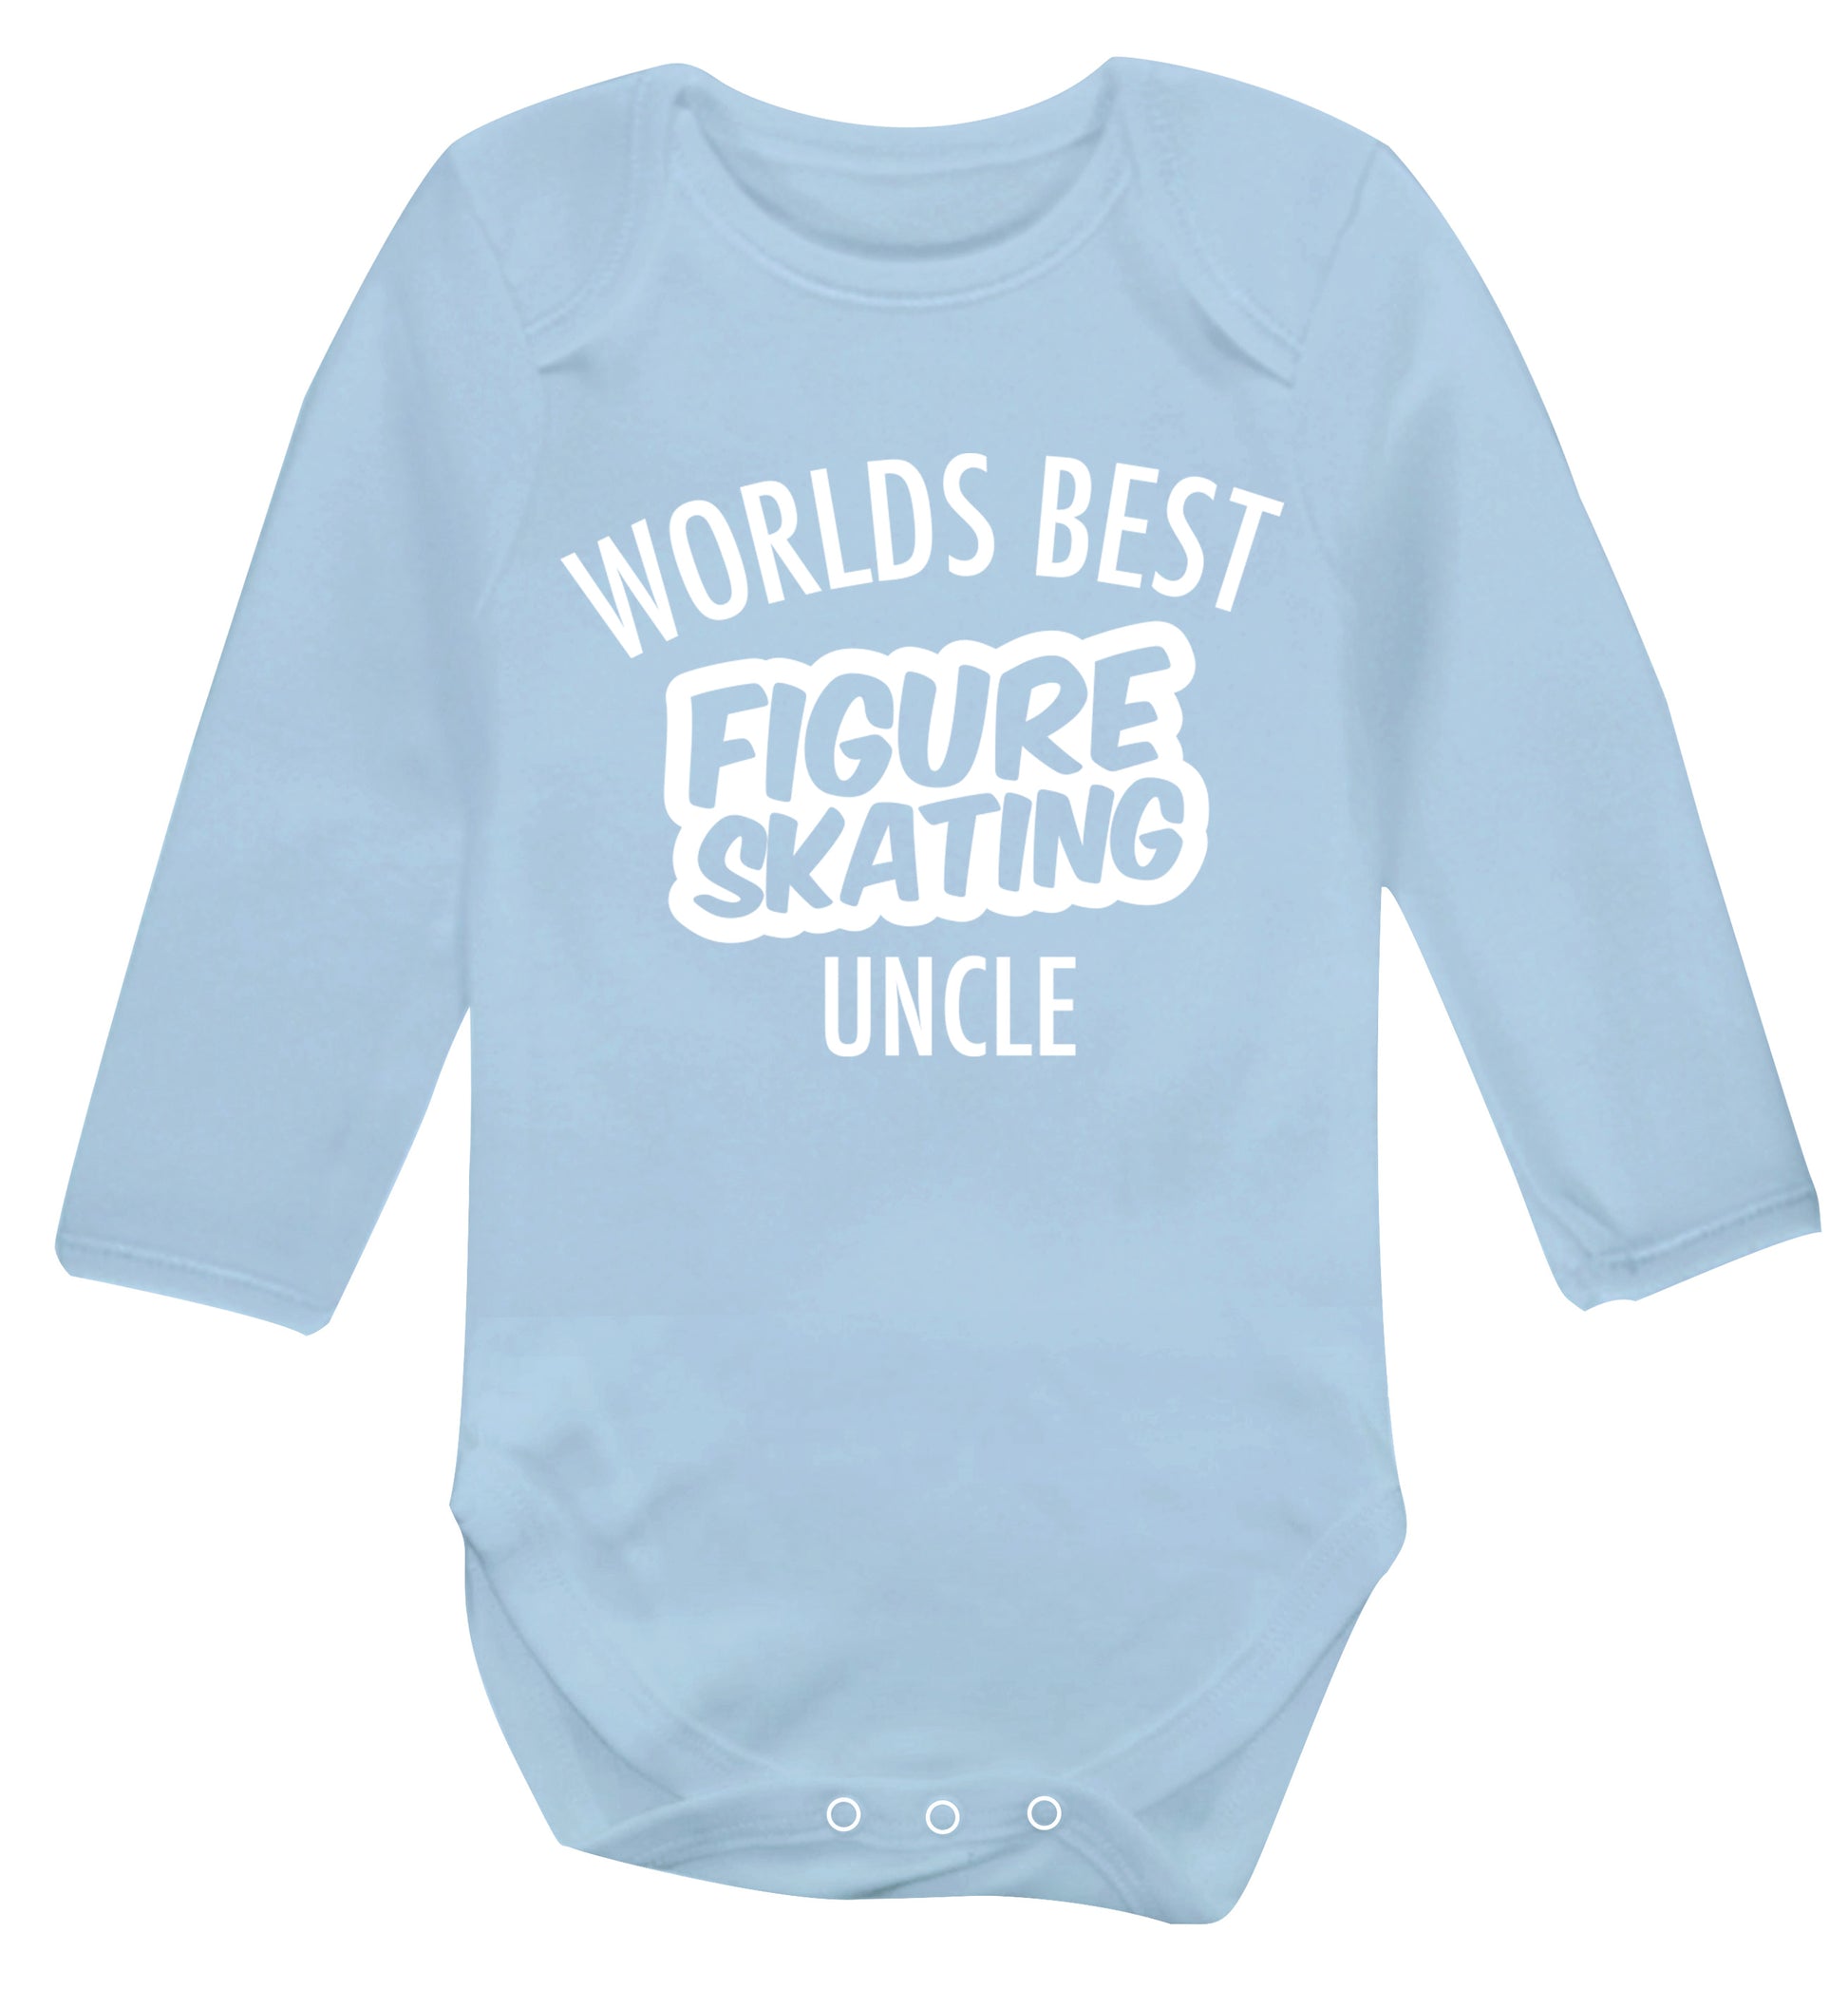 Worlds best figure skating uncle Baby Vest long sleeved pale blue 6-12 months